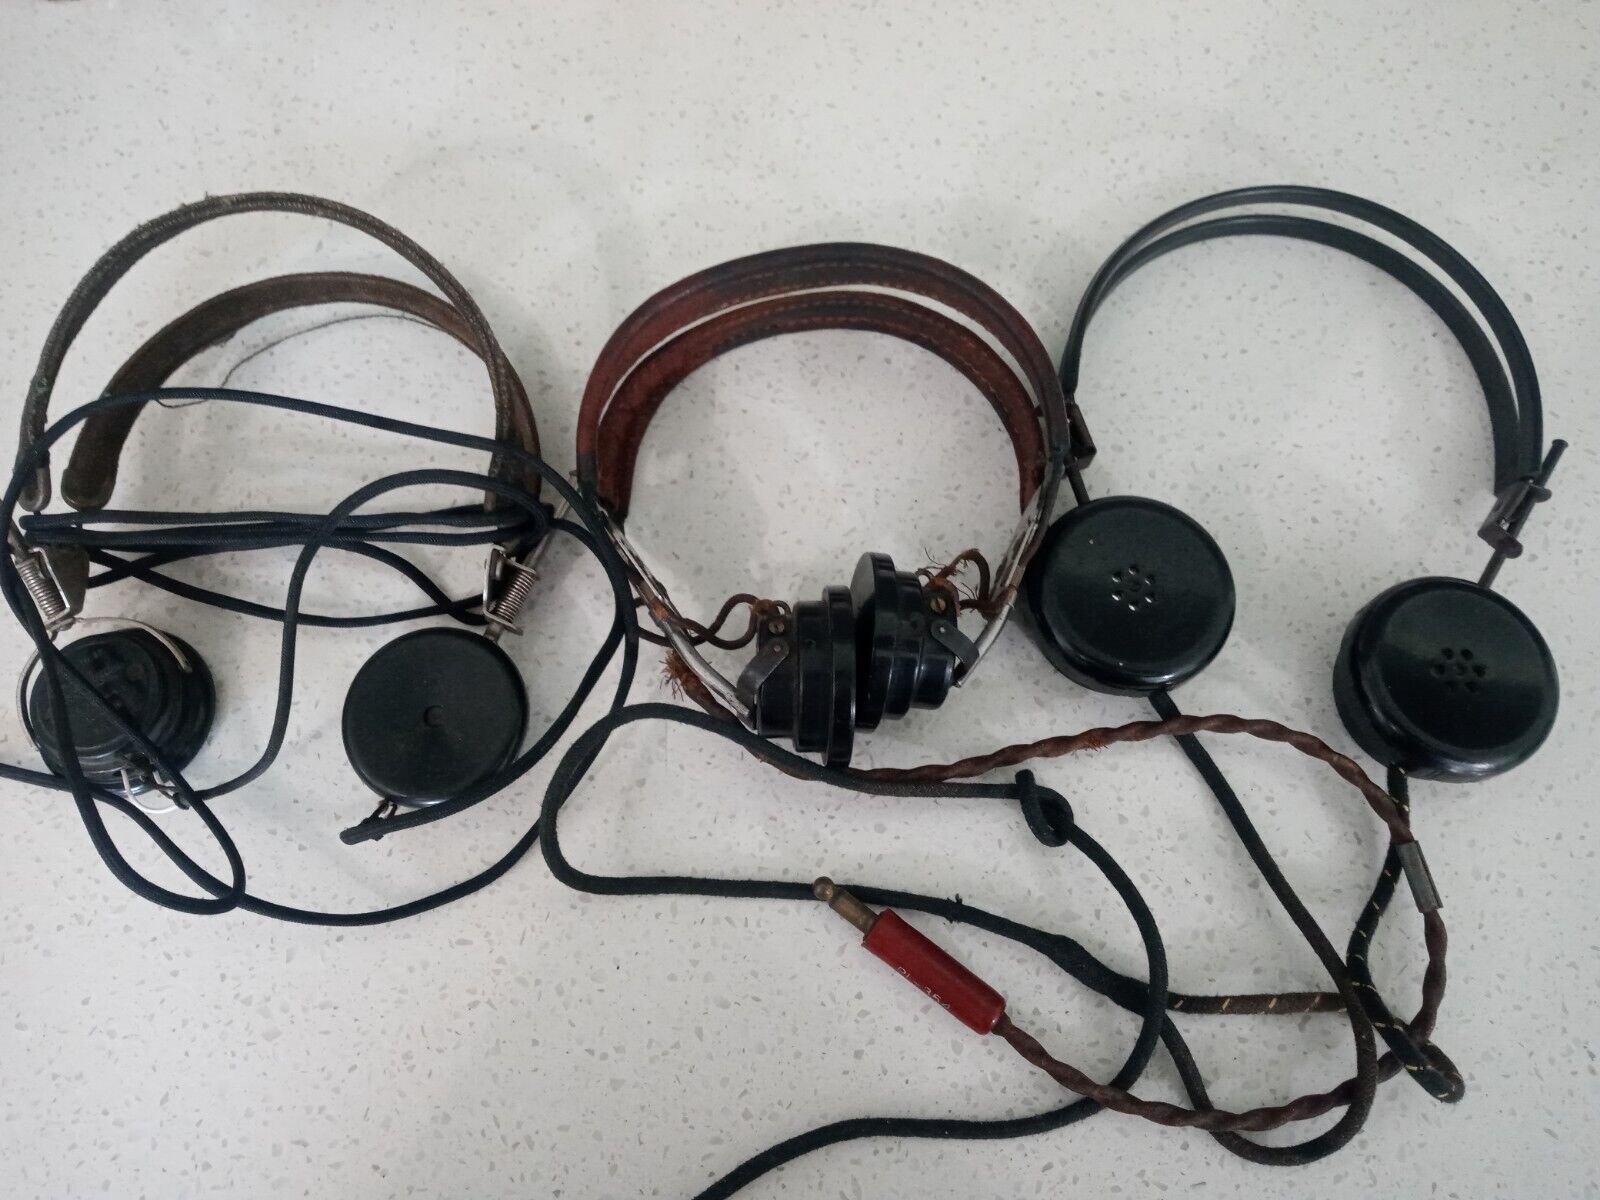 Vintage military headsets, set of 3.